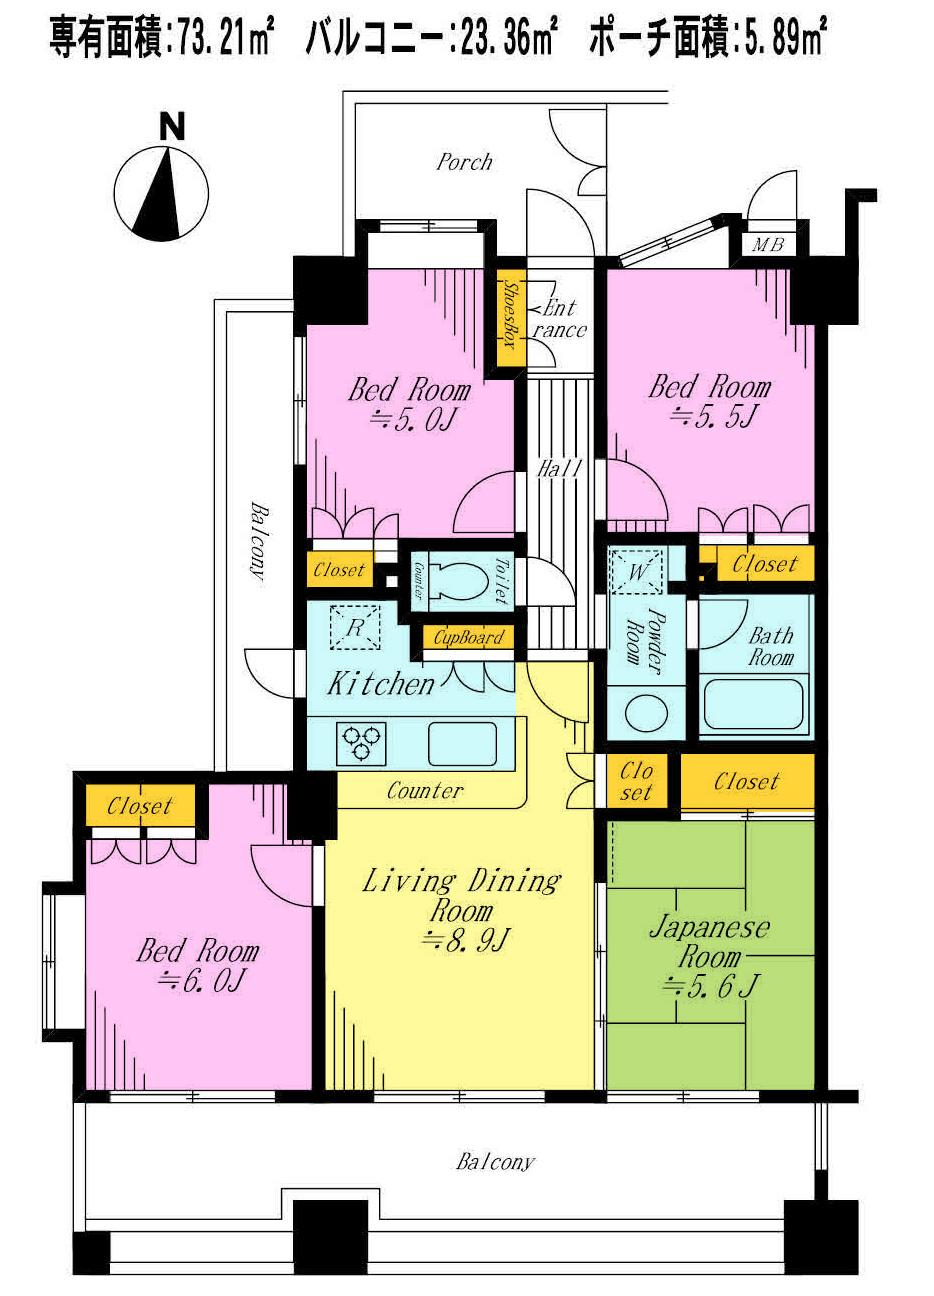 Floor plan. 4LDK, Price 19,980,000 yen, Occupied area 73.21 sq m , Balcony area 23.36 sq m